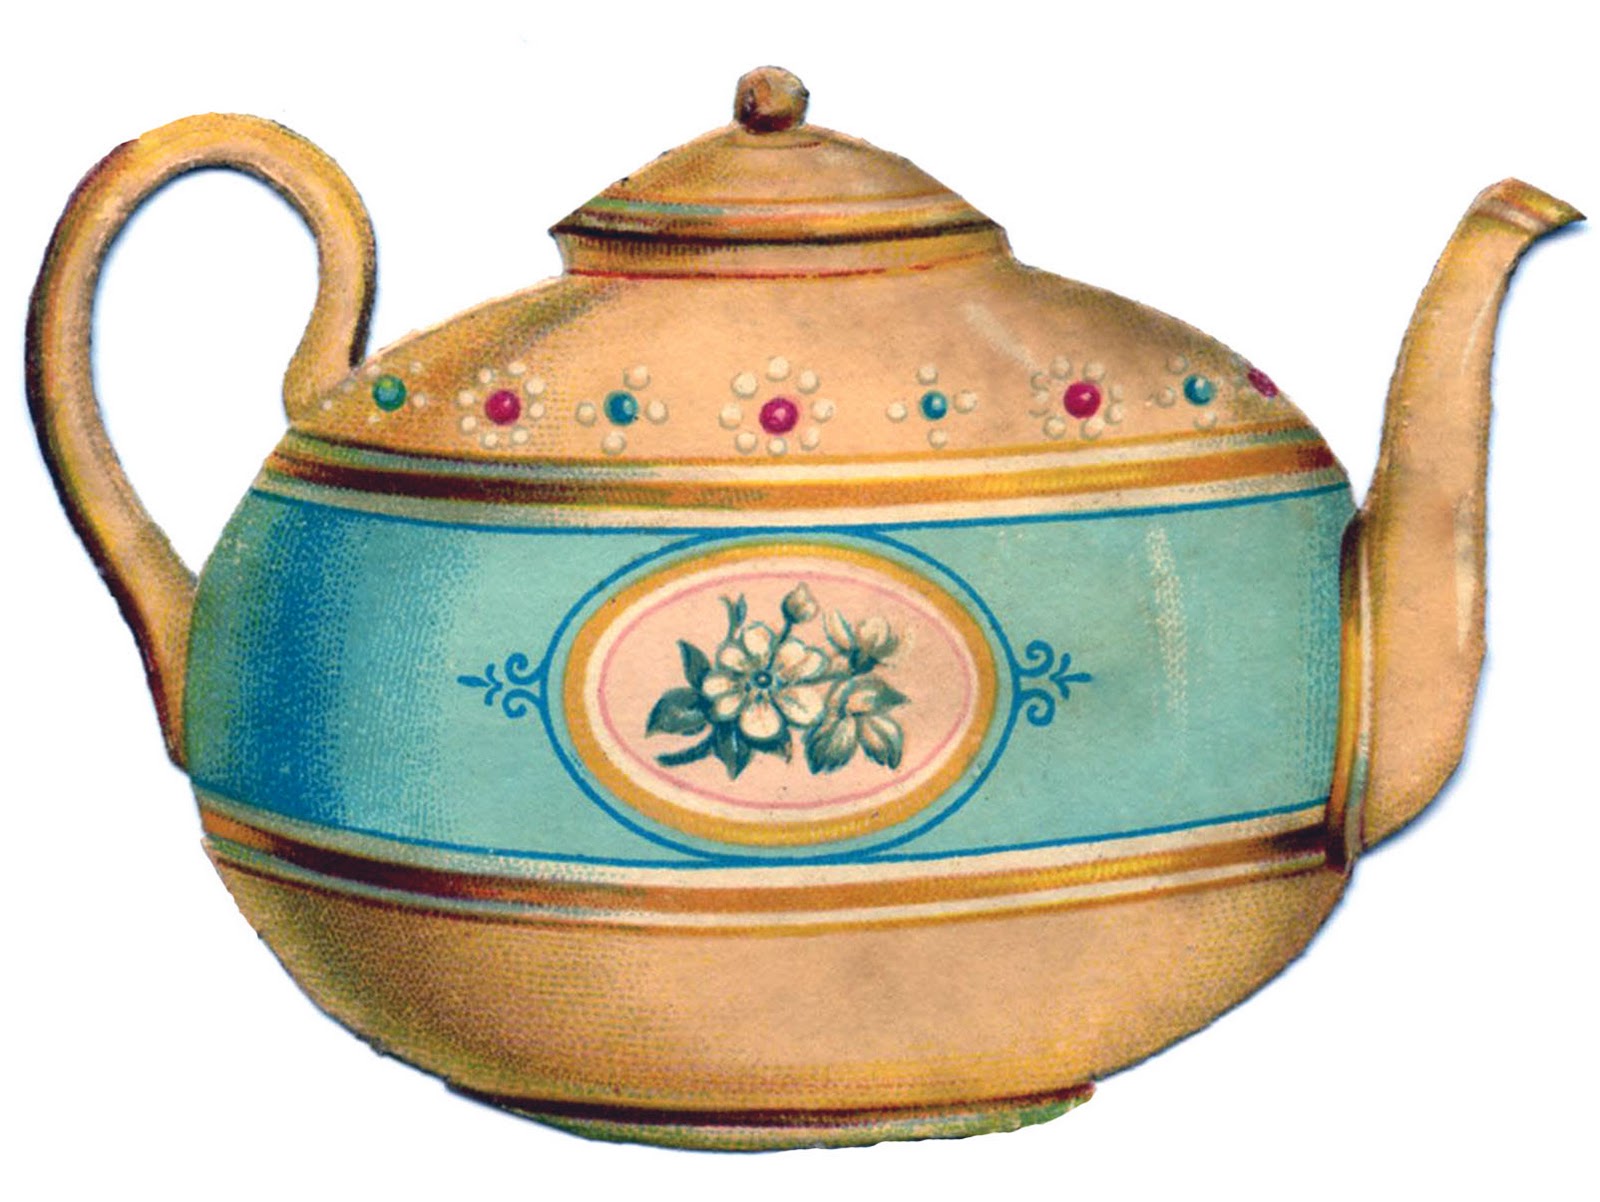 Free vintage teapot clip art the graphics fairy image